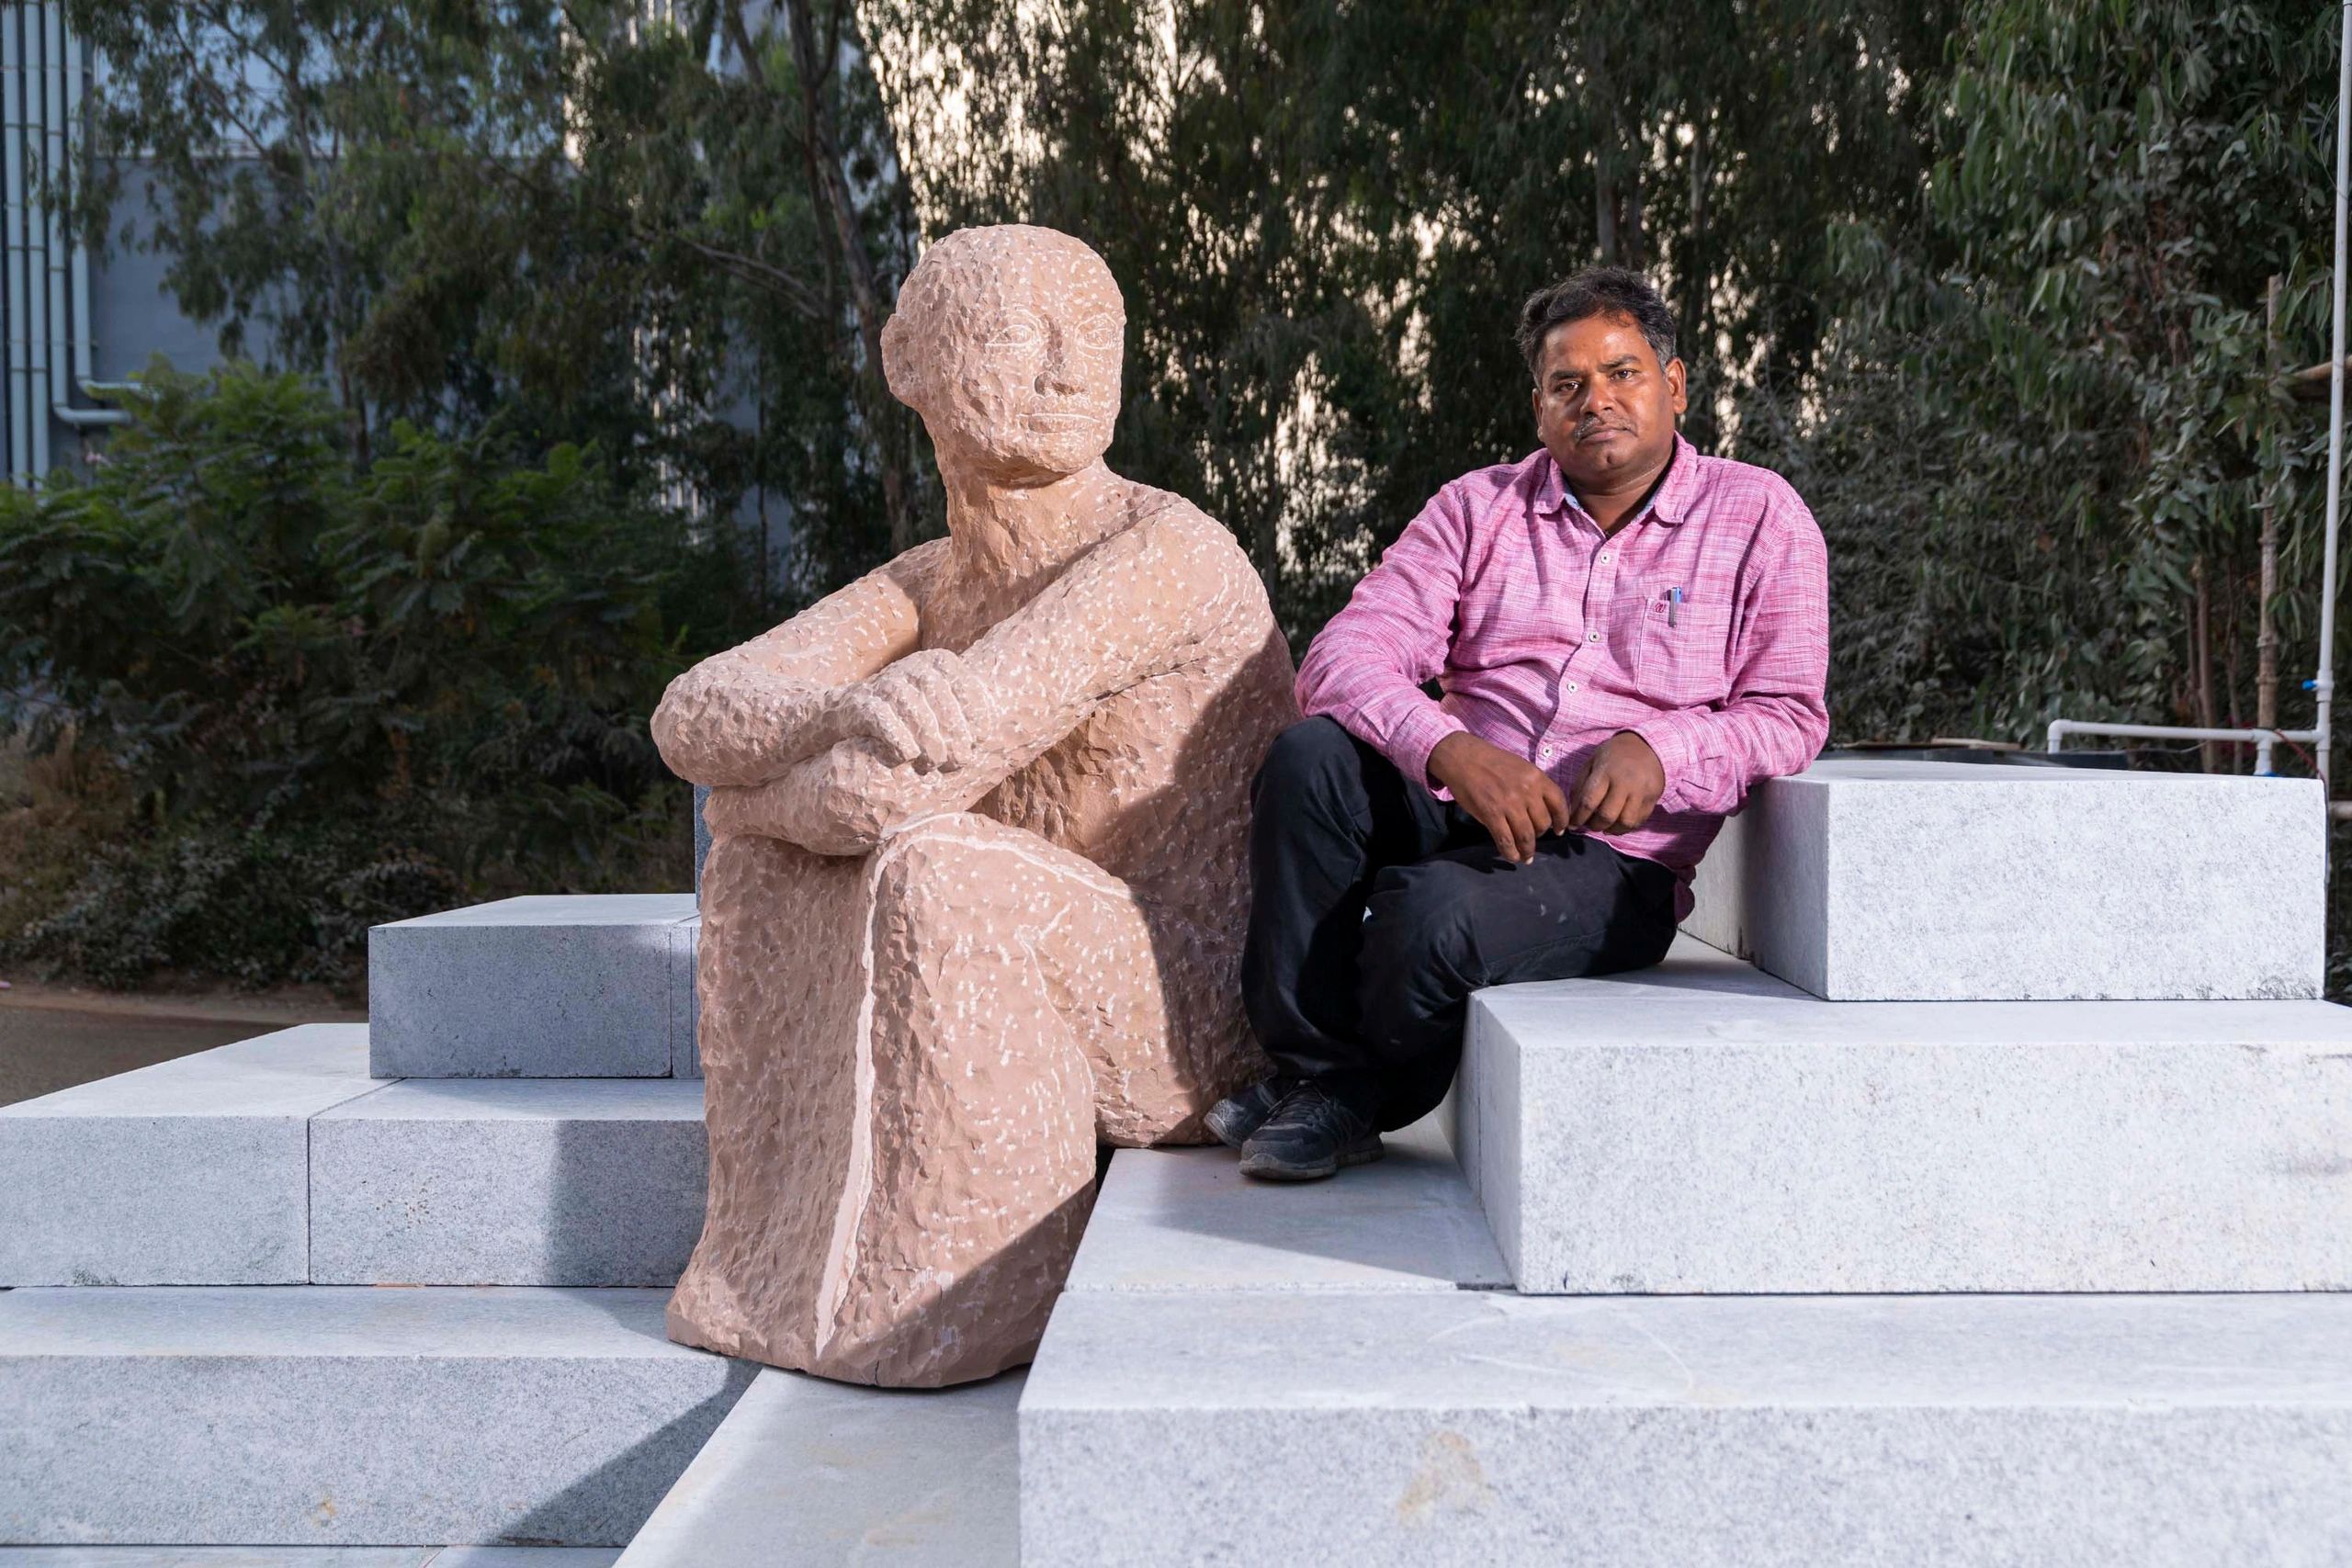 Hariprasad with His Sculpture at RMZ- Bengaluru- year 2018,
Photo by Mallikarjun Katakol